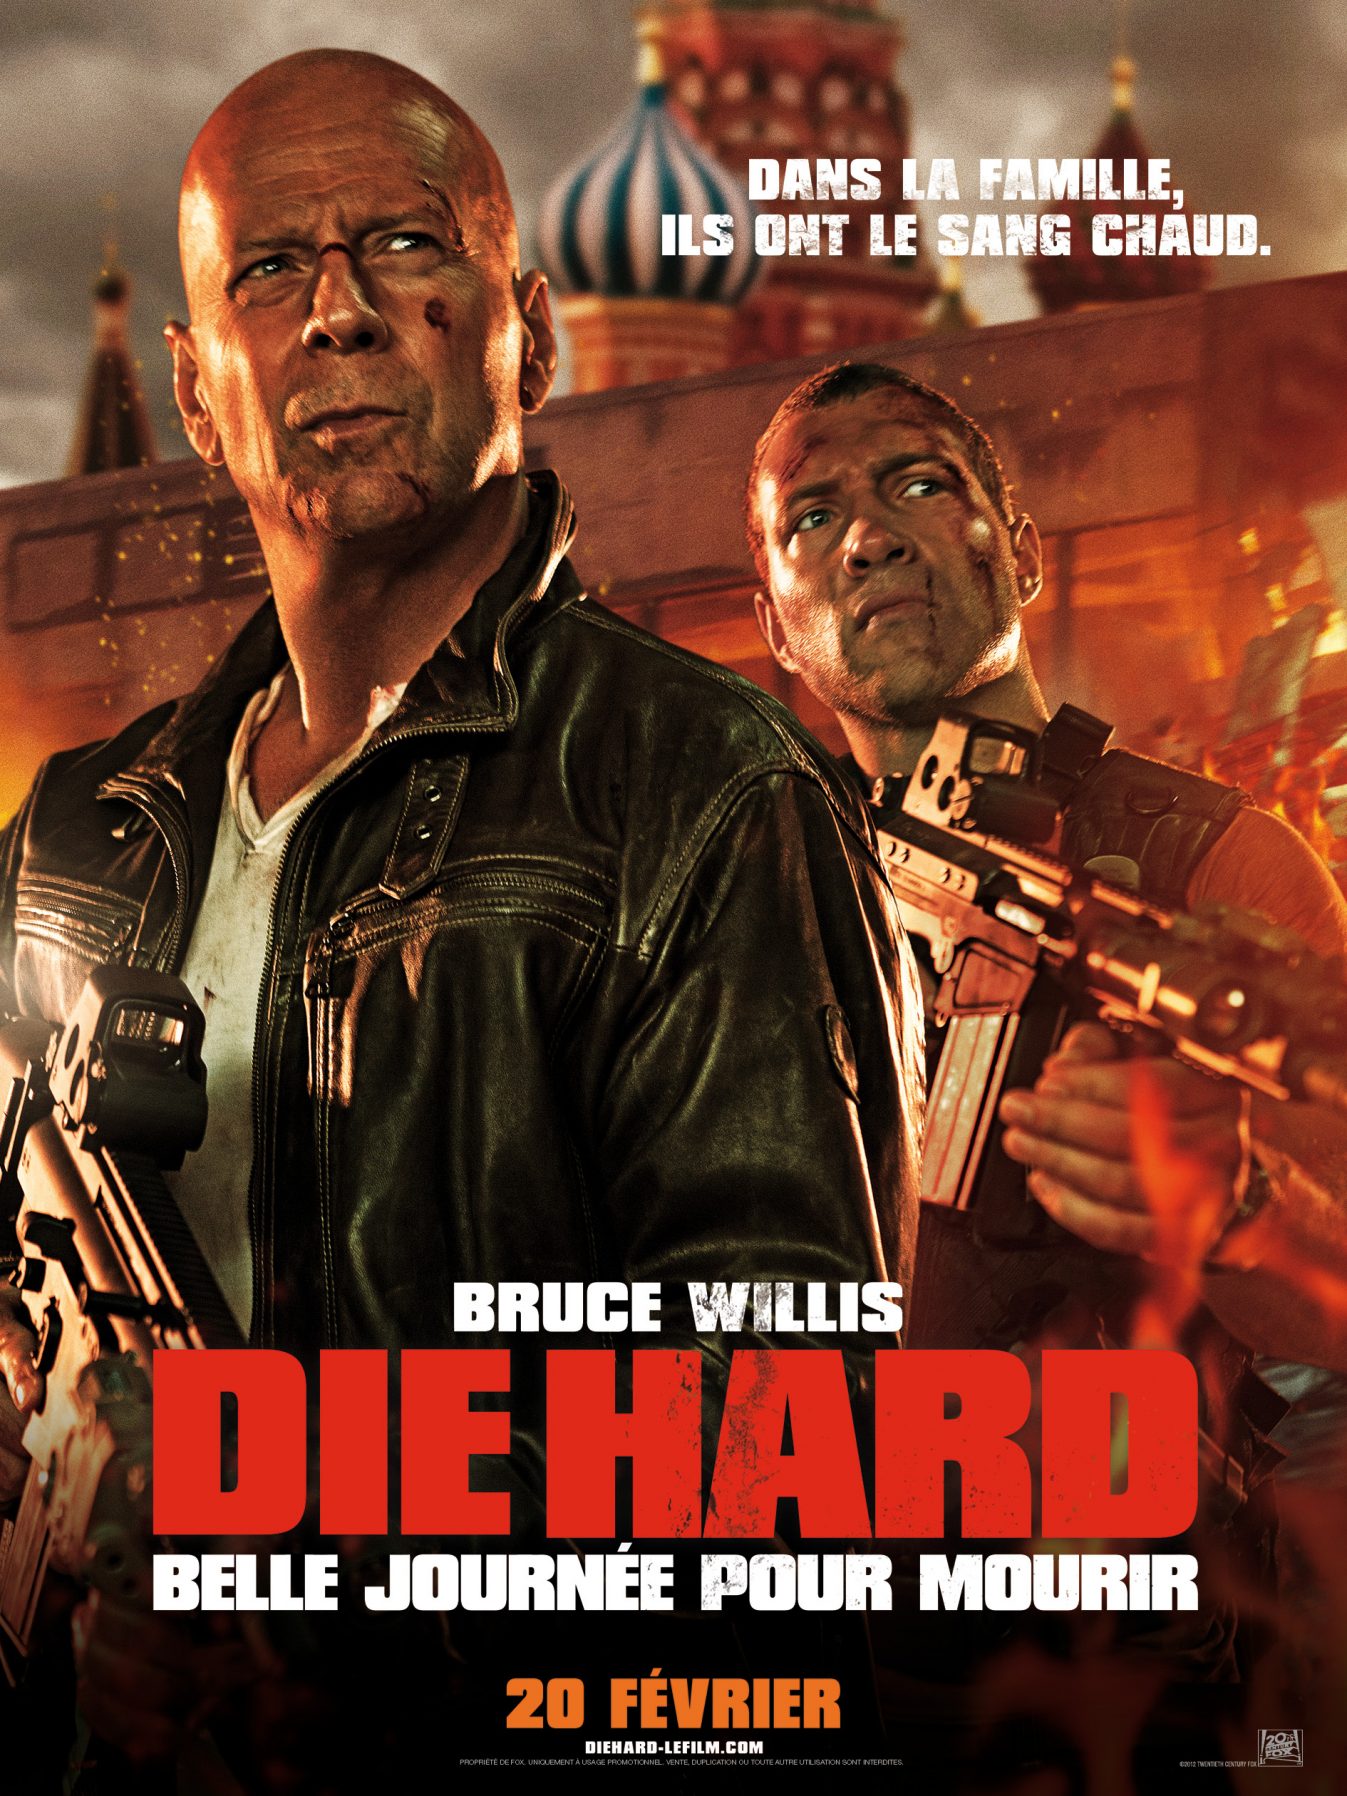 Die hard 5 : affiche du film et nouvelle bande-annonce explosive